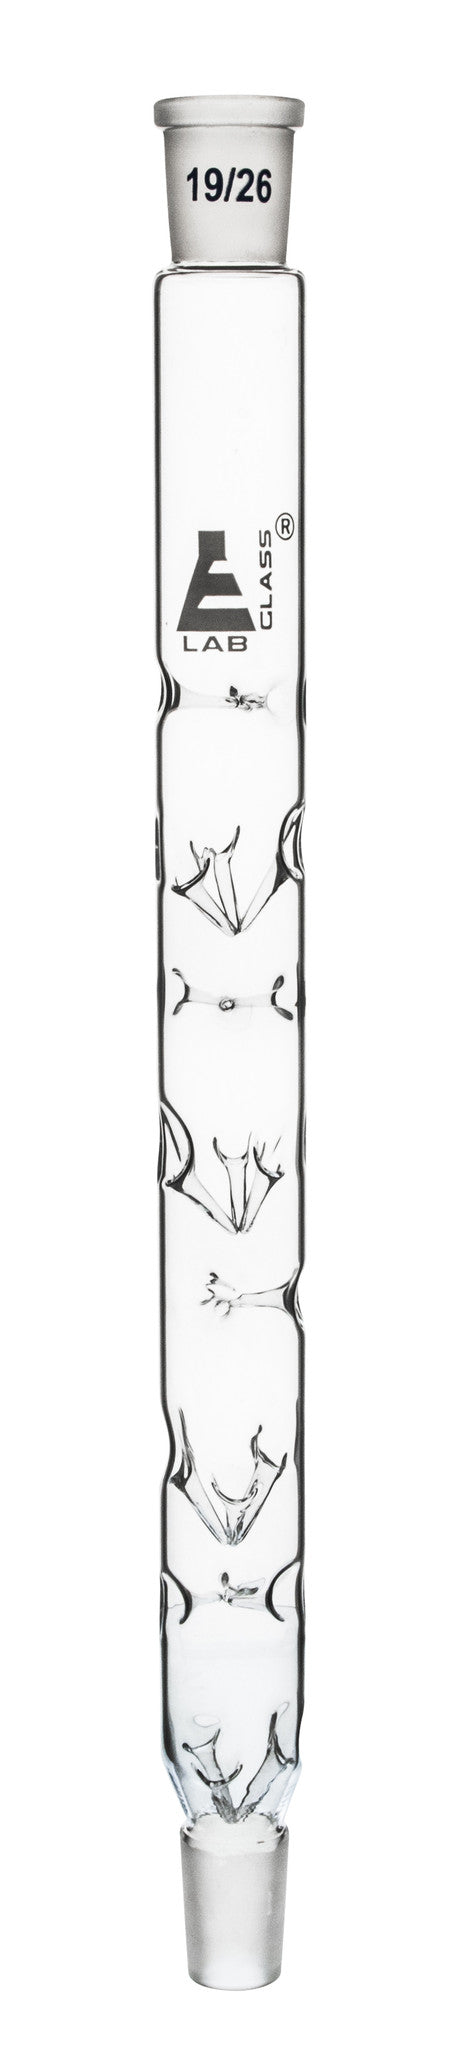 Vigrex Fractioning Column, Socket 24/29, Cone 24/29, Length 360 mm